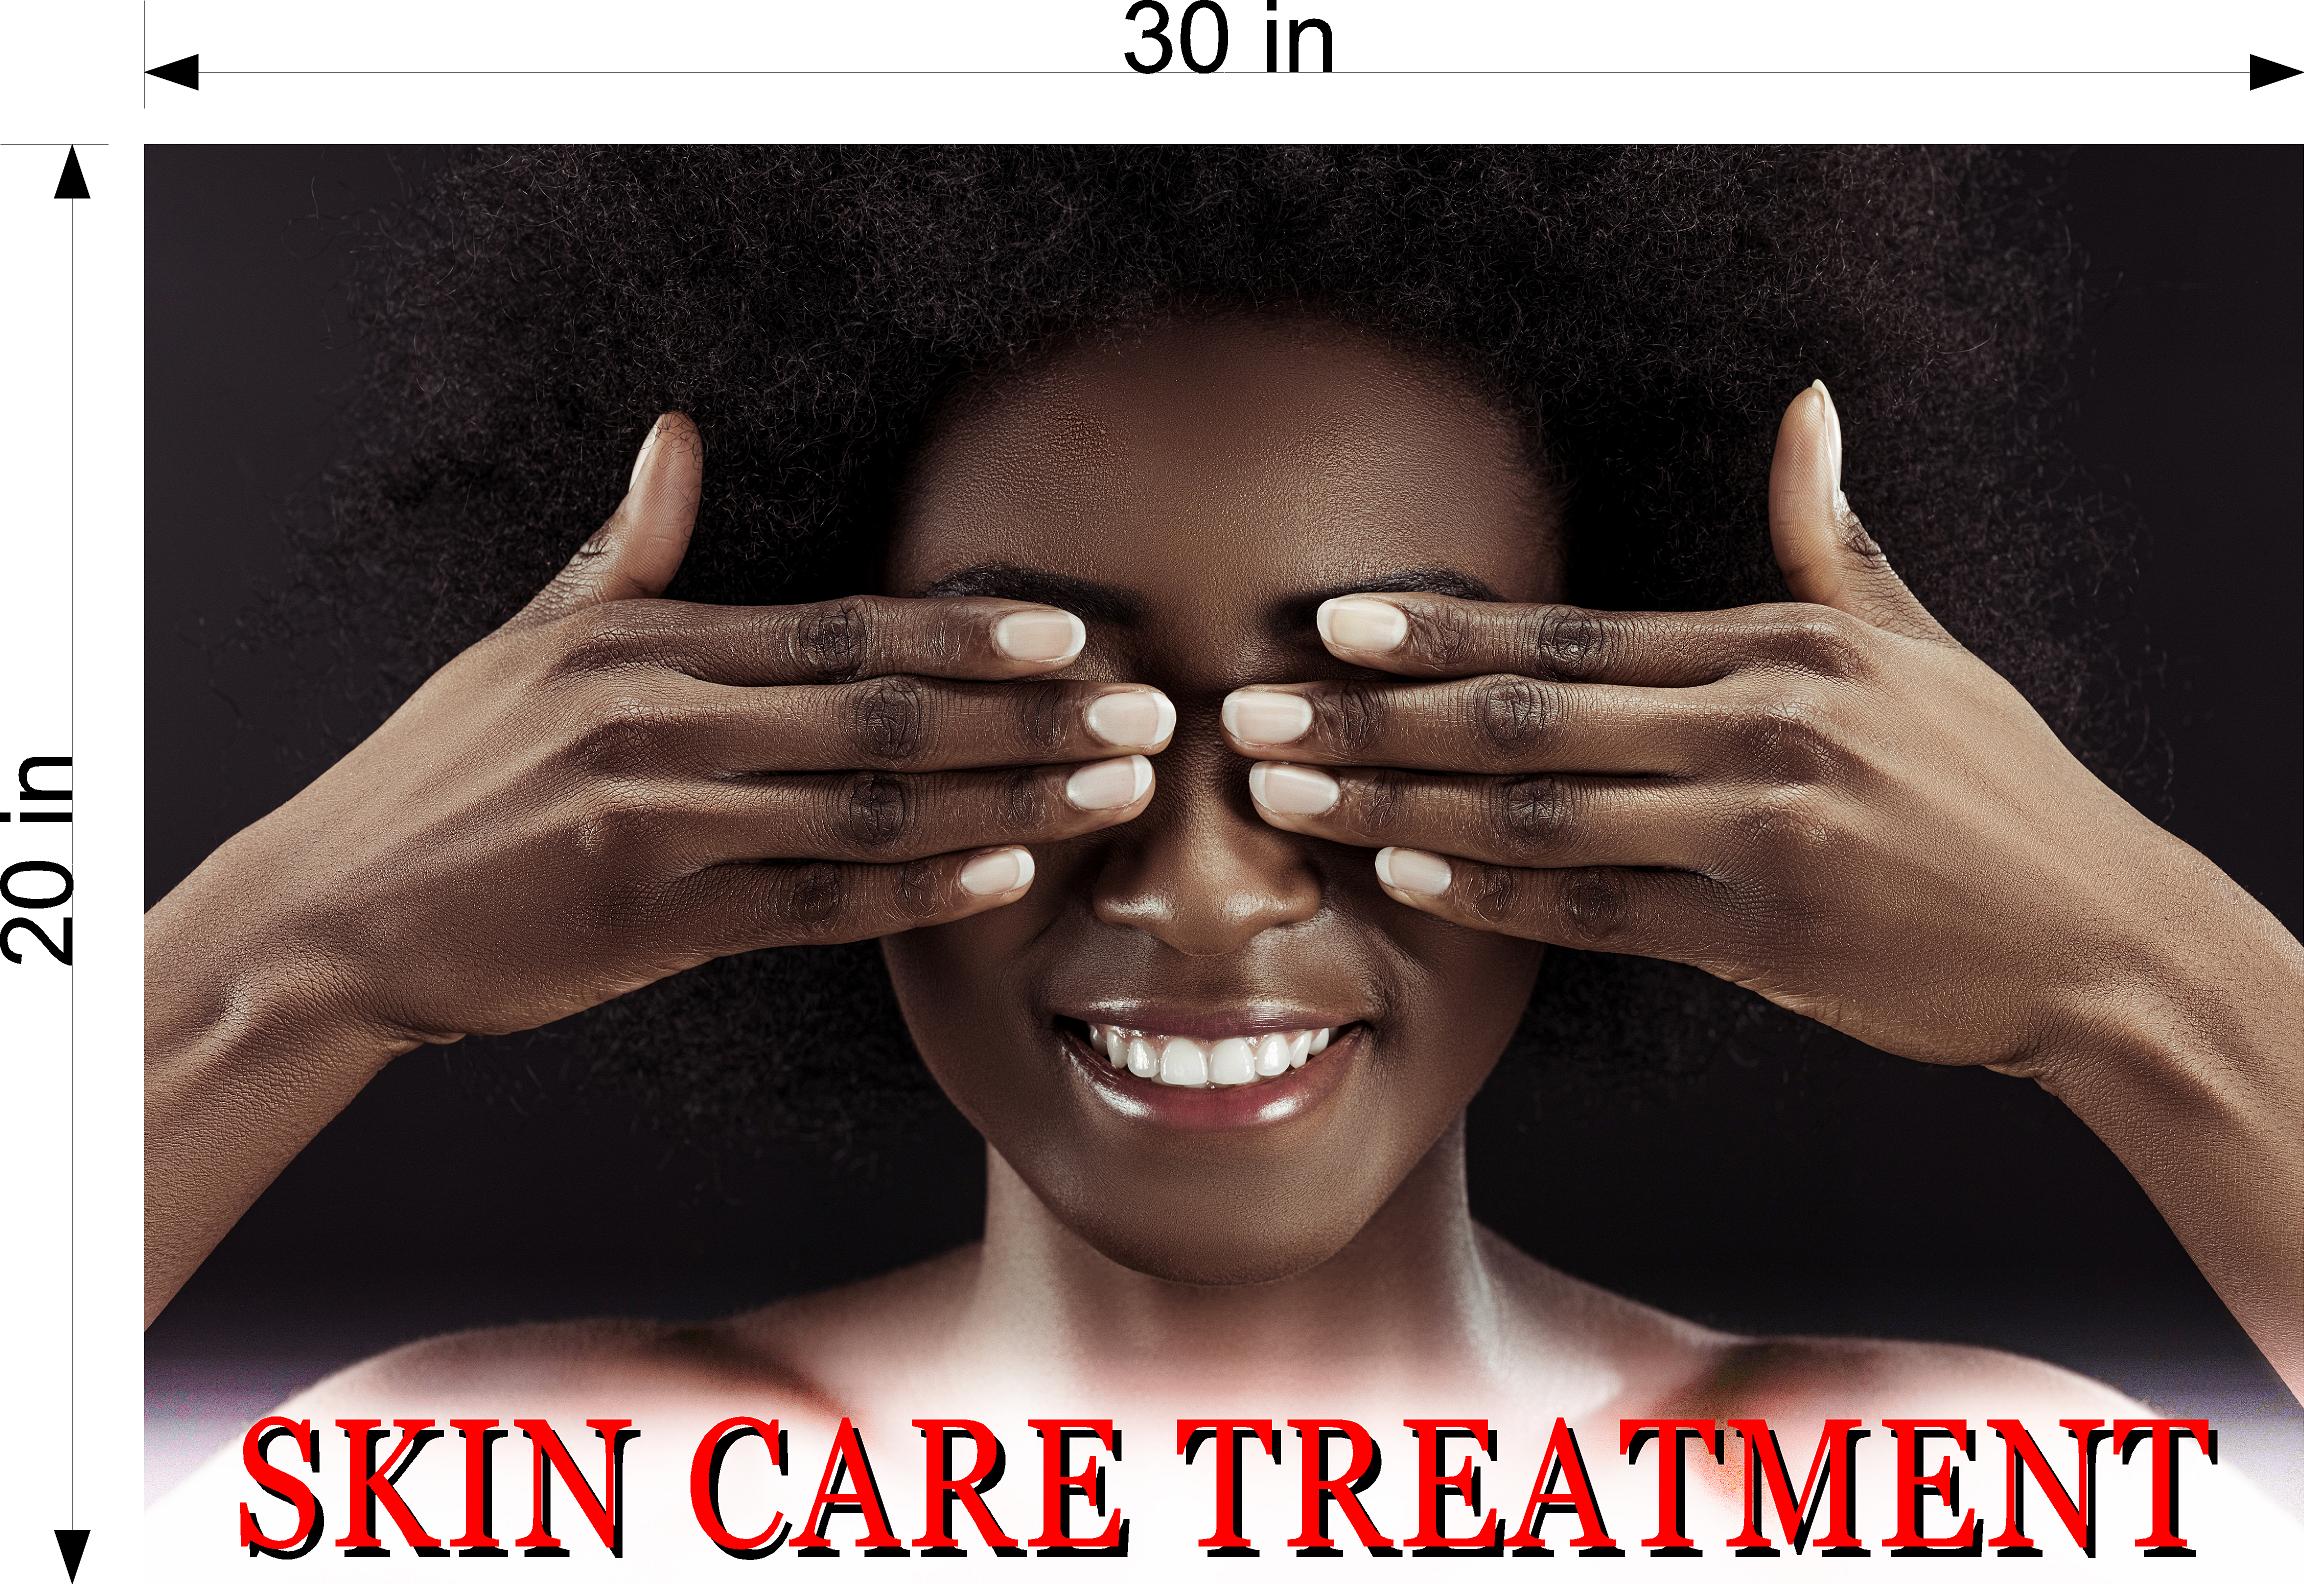 Skin Care 09 Photo-Realistic Paper Poster Premium Interior Sign Advertising Wall Window Non-Laminated Horizontal